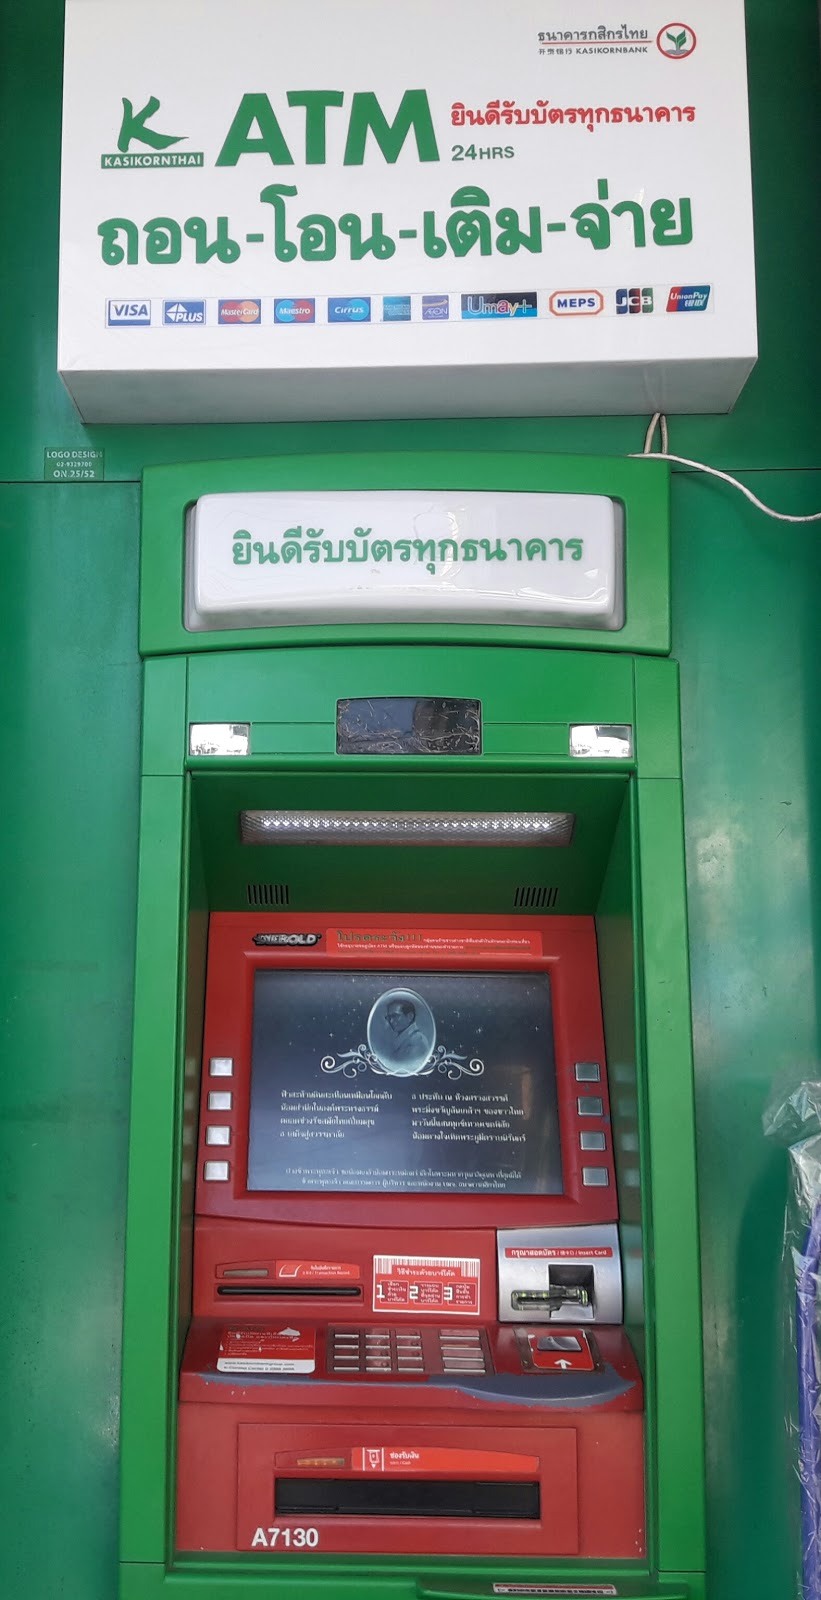 ATM ธนาคารกสิกรไทย ร้าน กรีนดรักส์